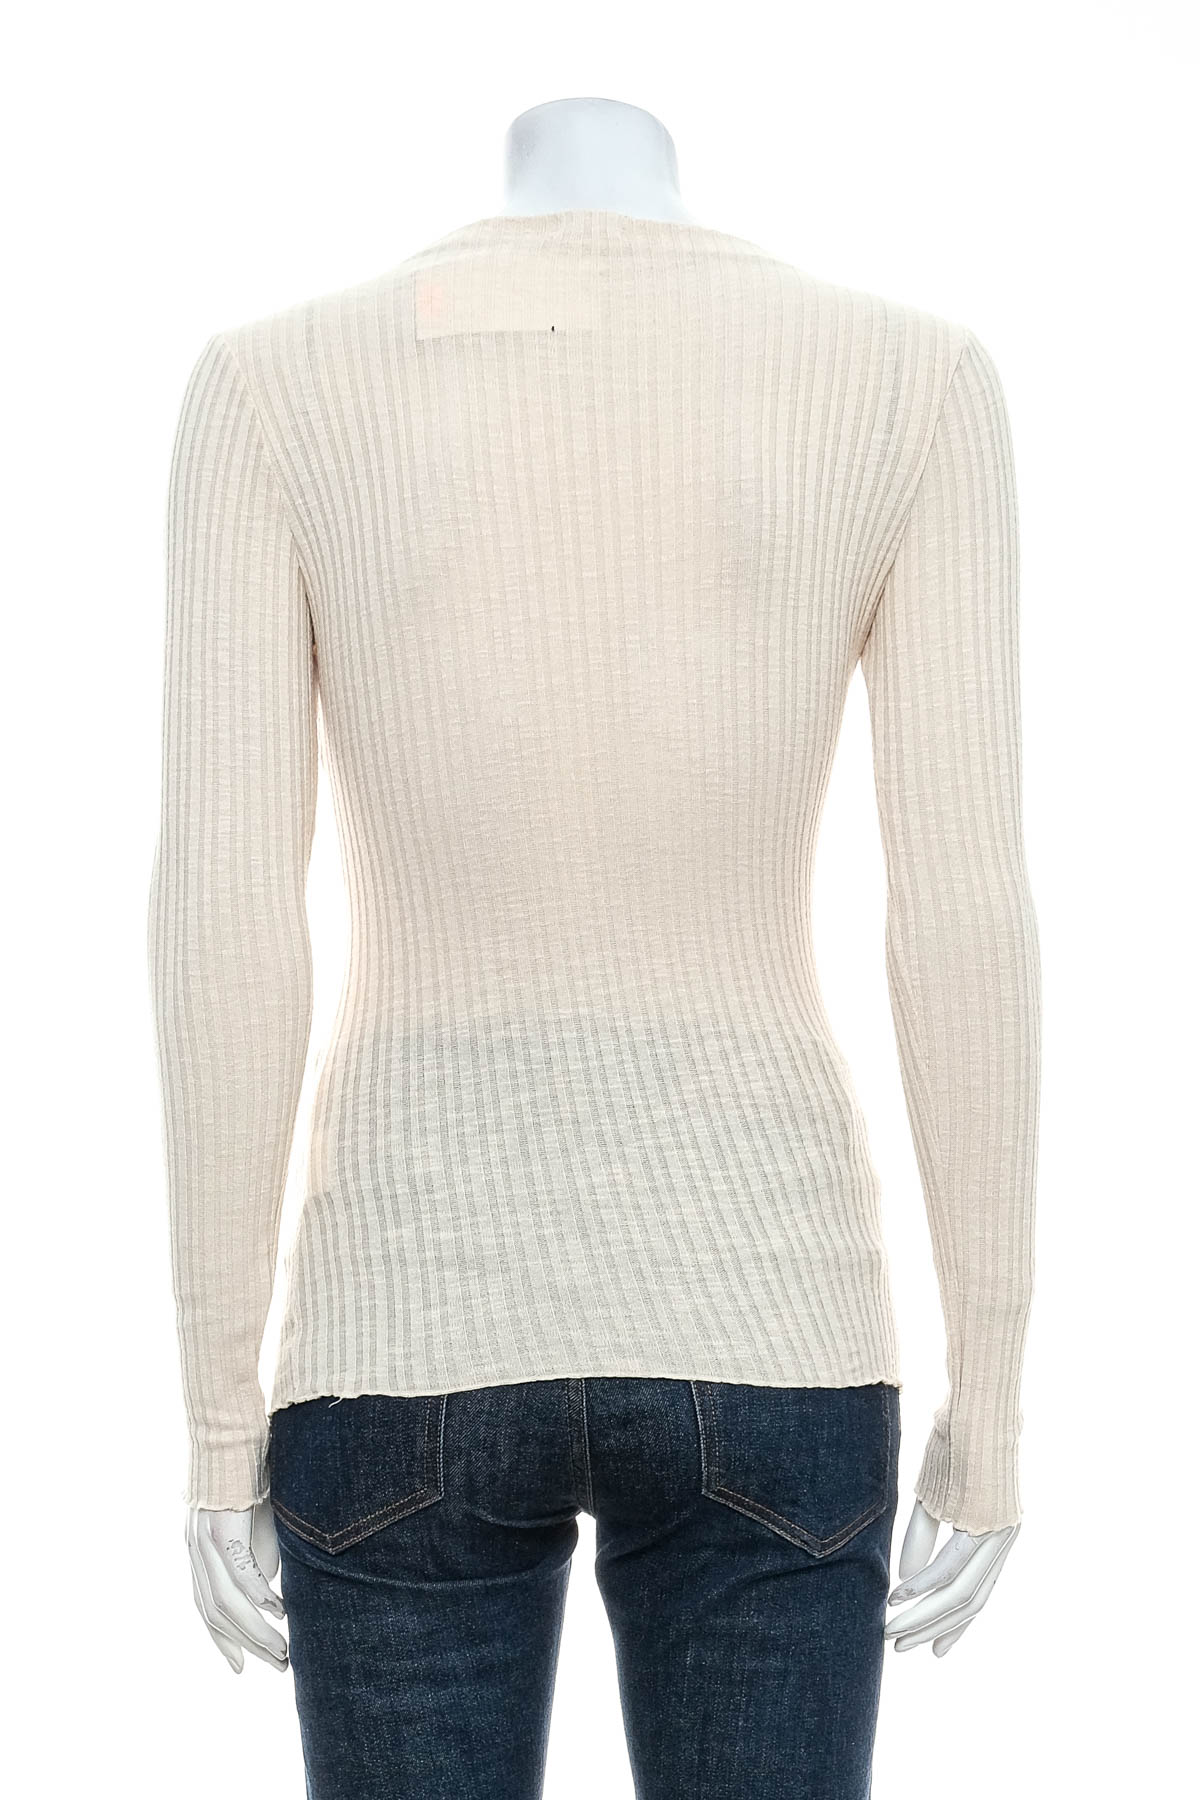 Women's sweater - Pimkie - 1